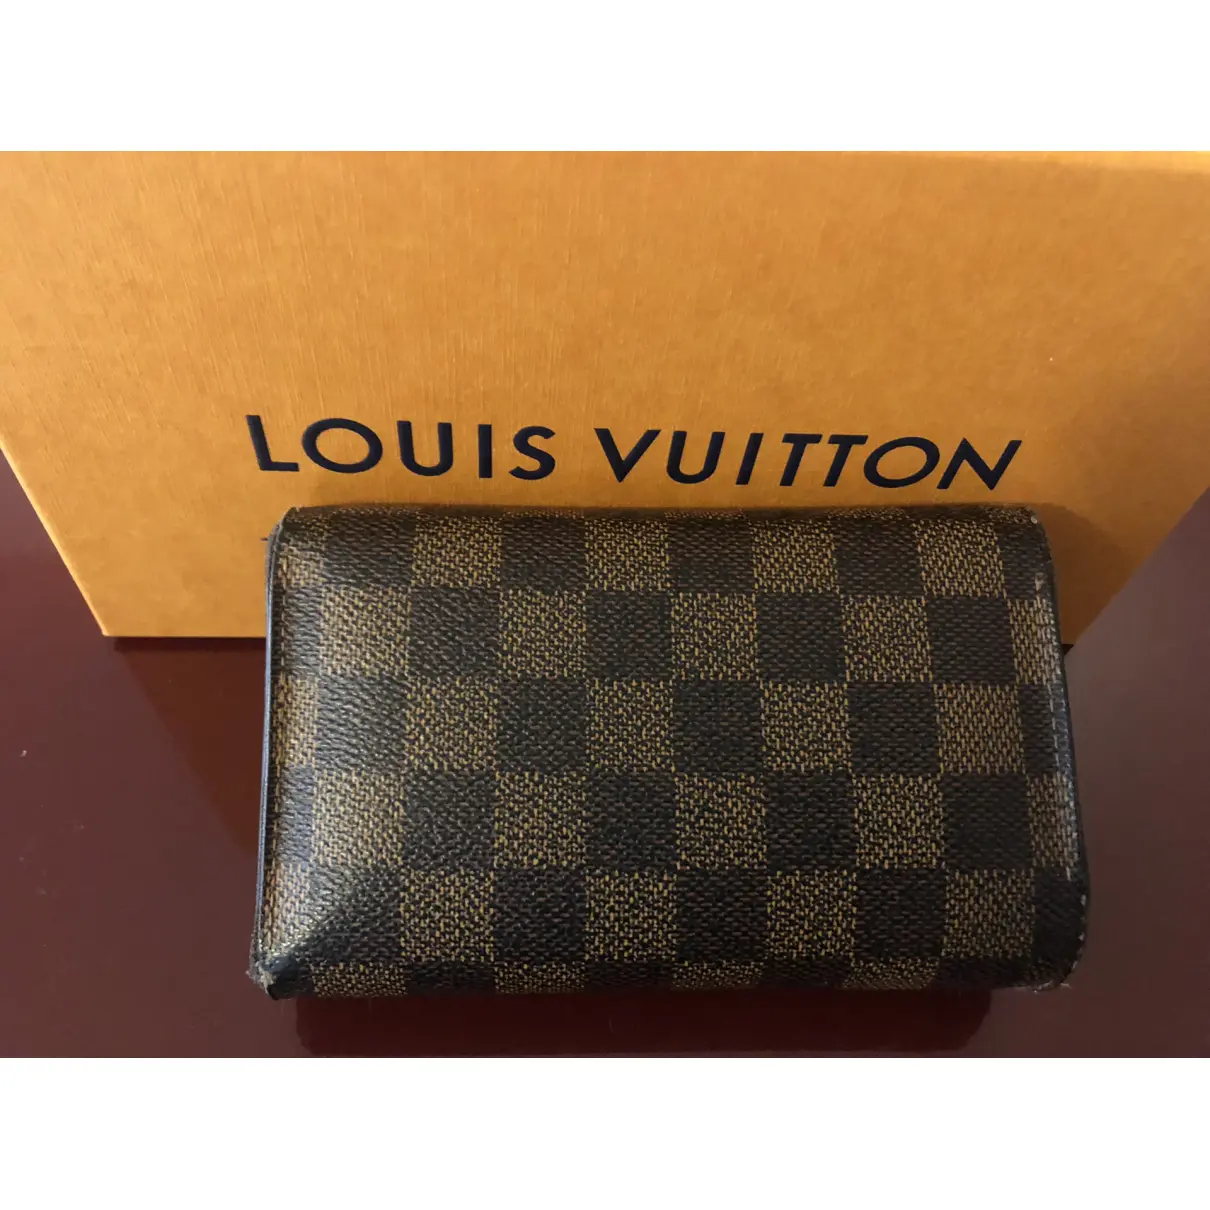 Buy Louis Vuitton Alexandra leather wallet online